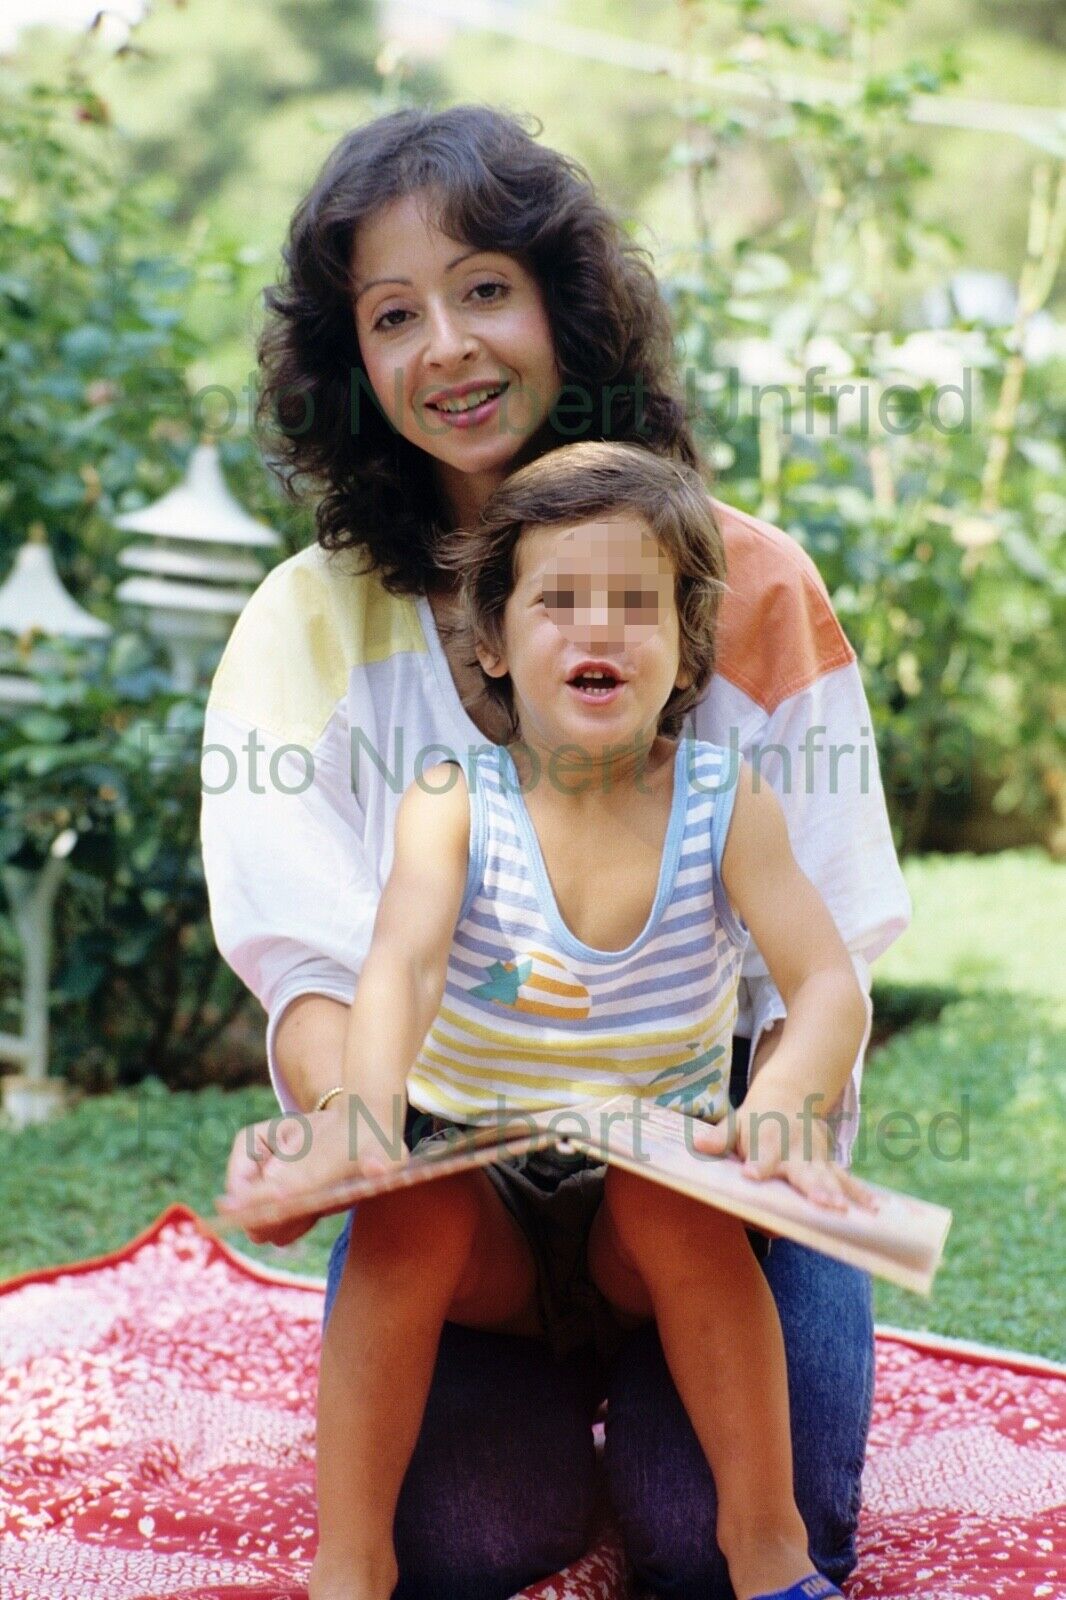 Vicky Leandros mit Kind - Foto 20 x 30 cm ohne Autogramm (Nr 2-346